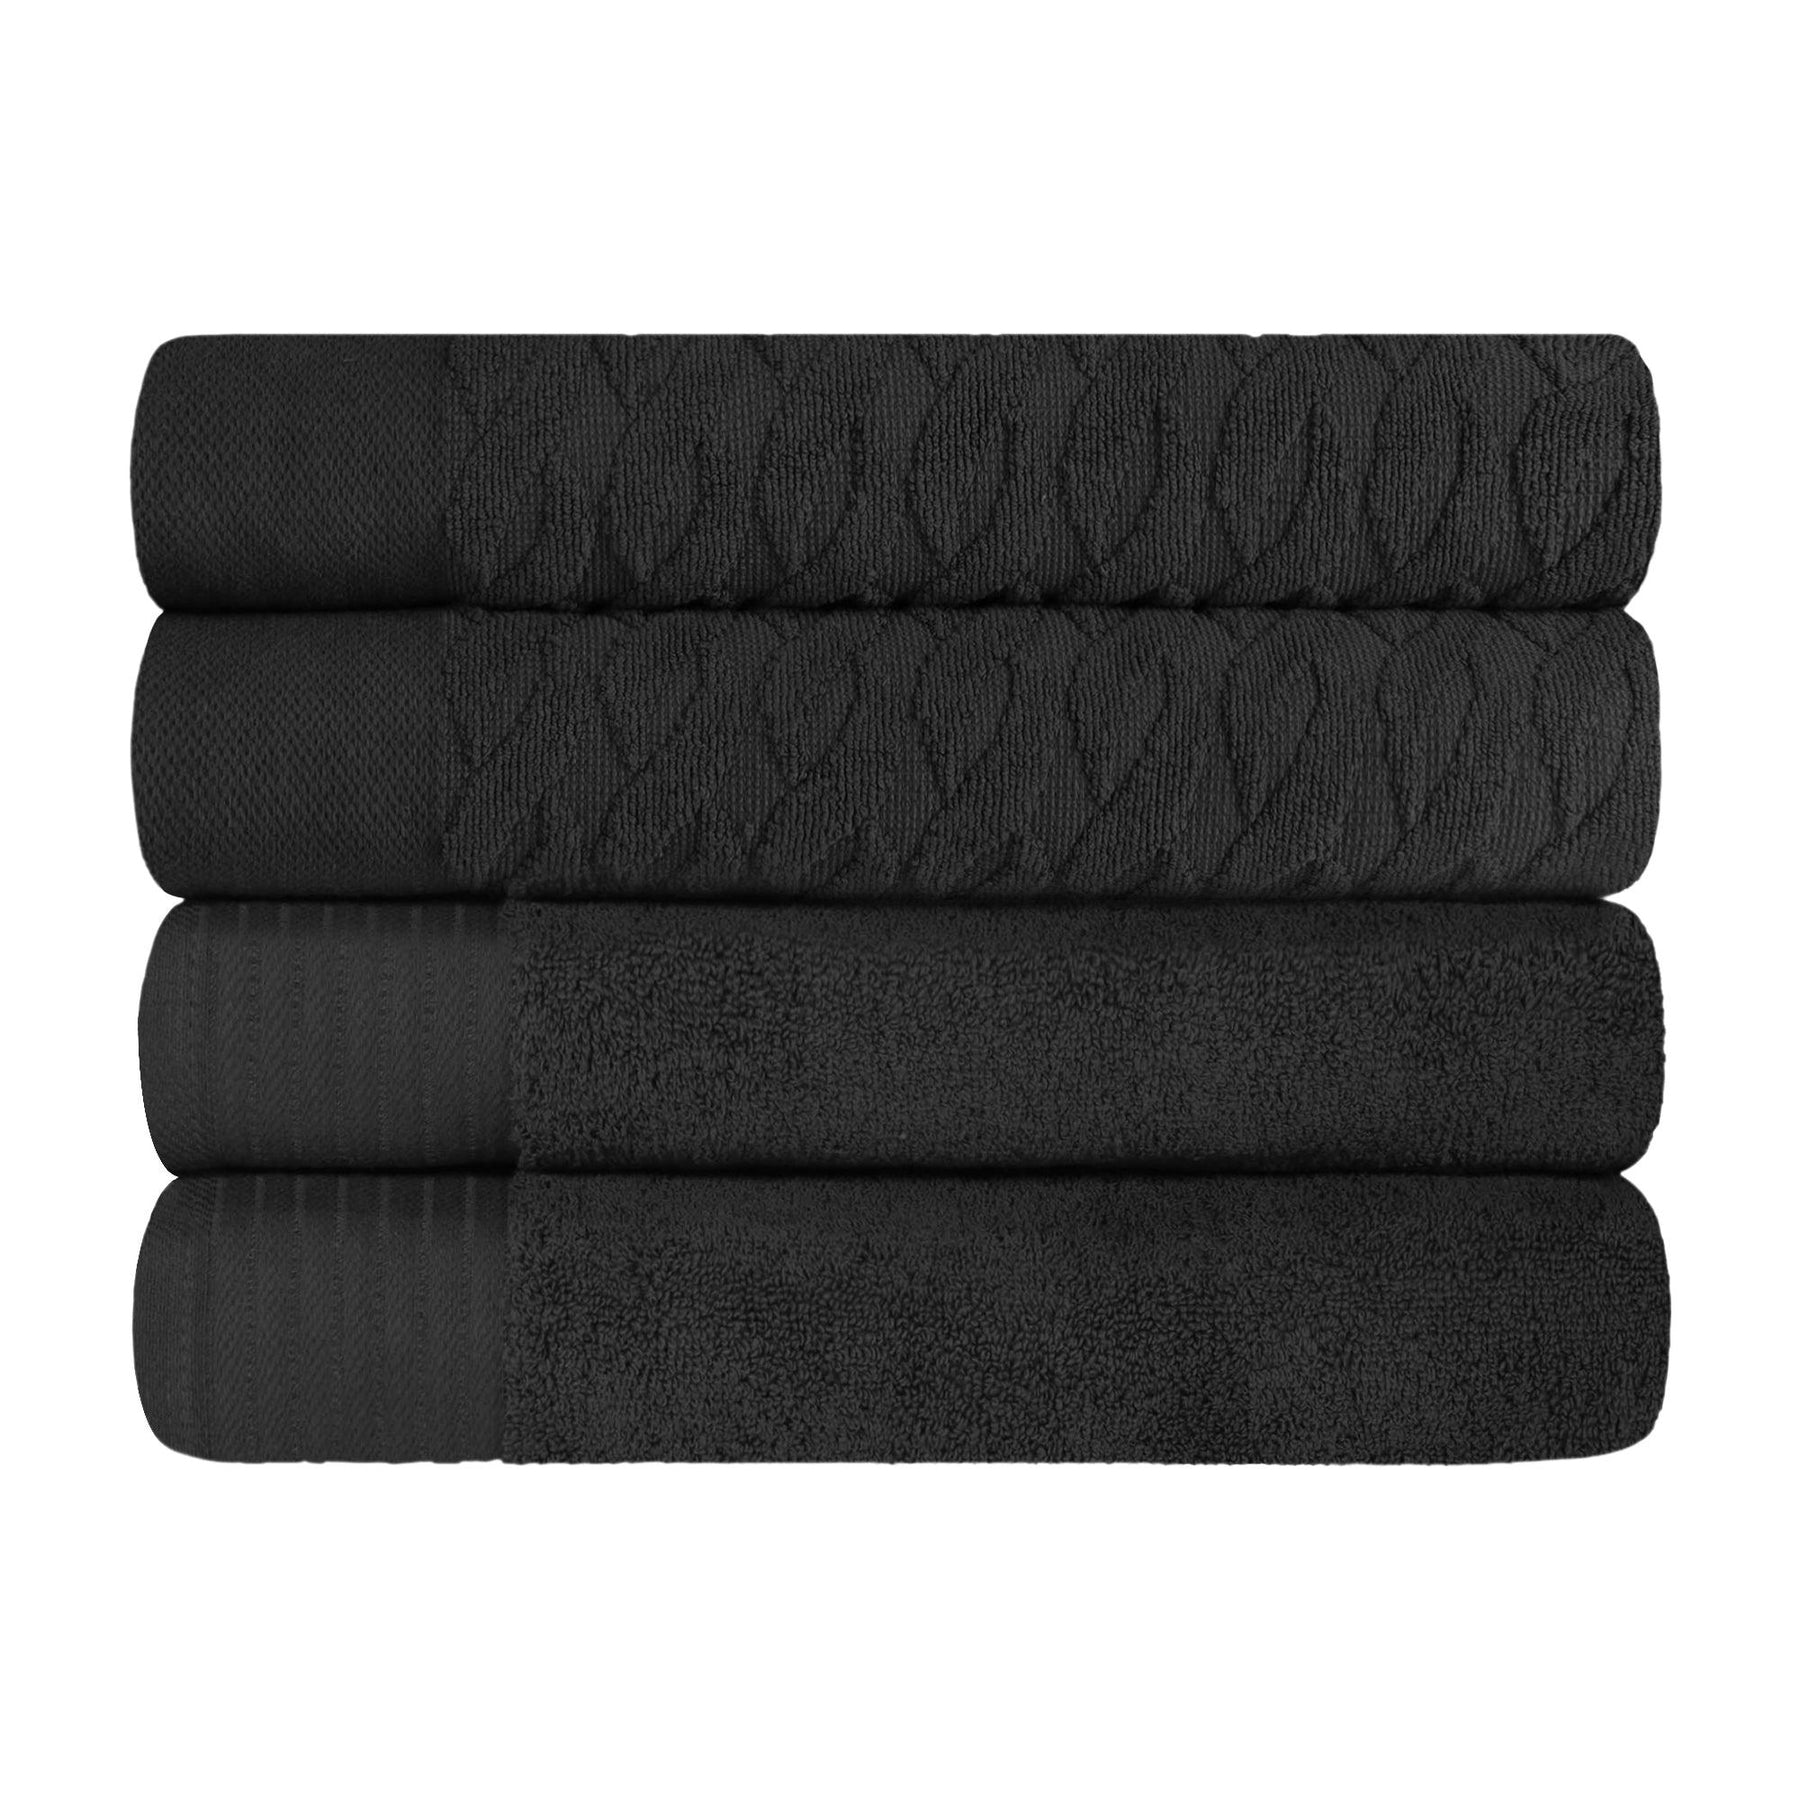 Premium Turkish Cotton Jacquard Herringbone and Solid 4-Piece Bath Towel Set - Black